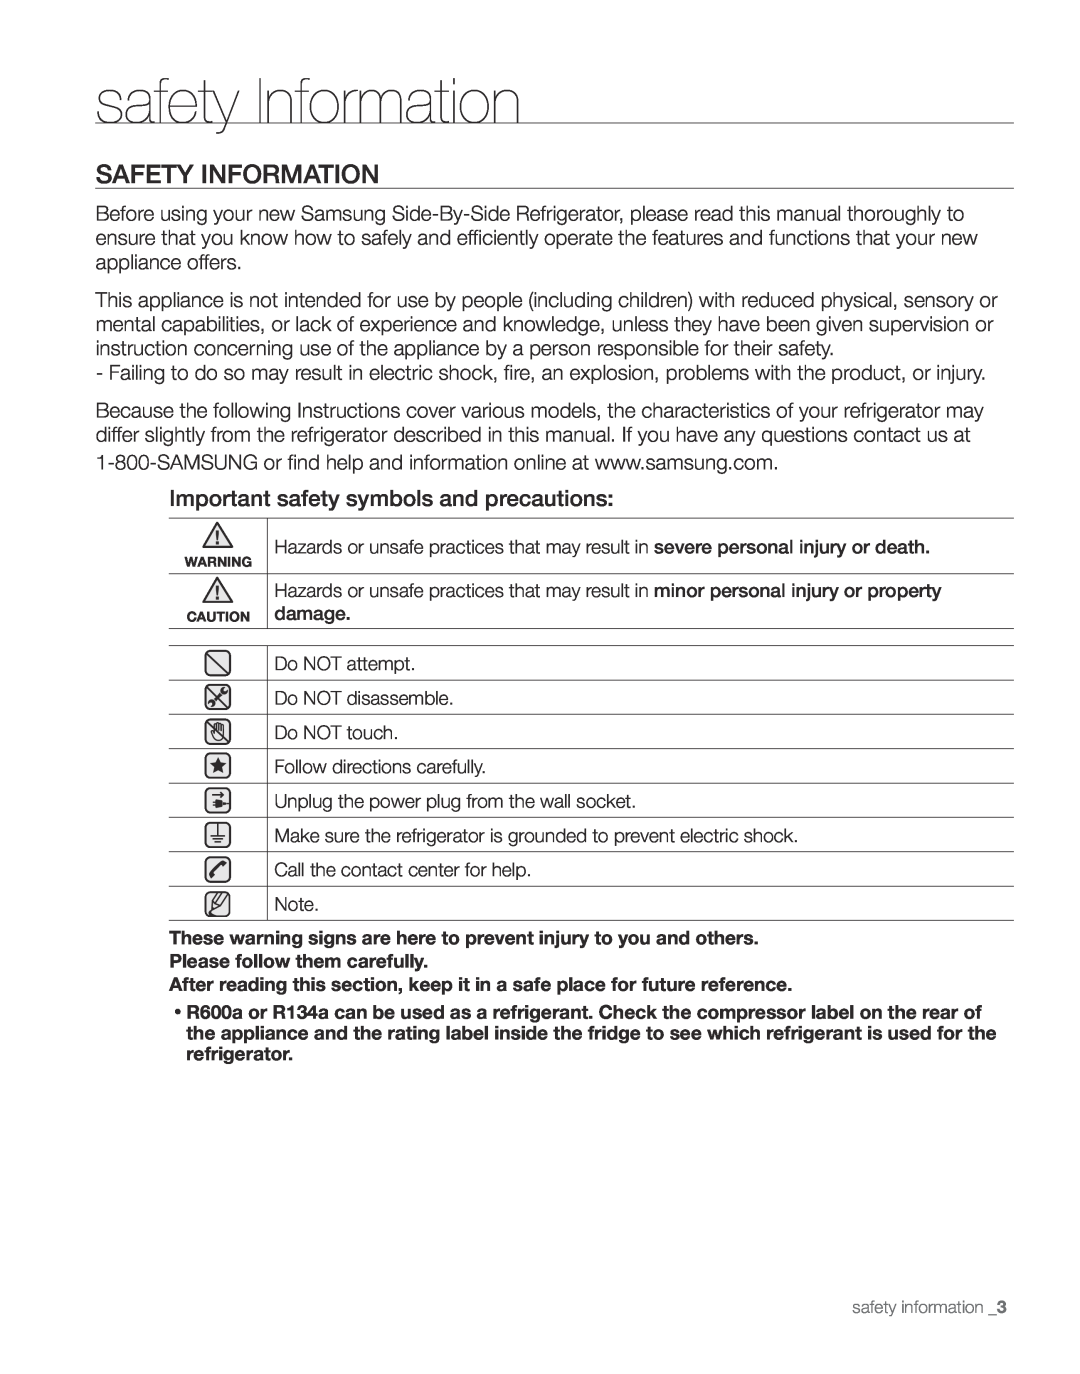 Samsung RS267TDPN user manual safety Information, Safety Information, Important safety symbols and precautions 